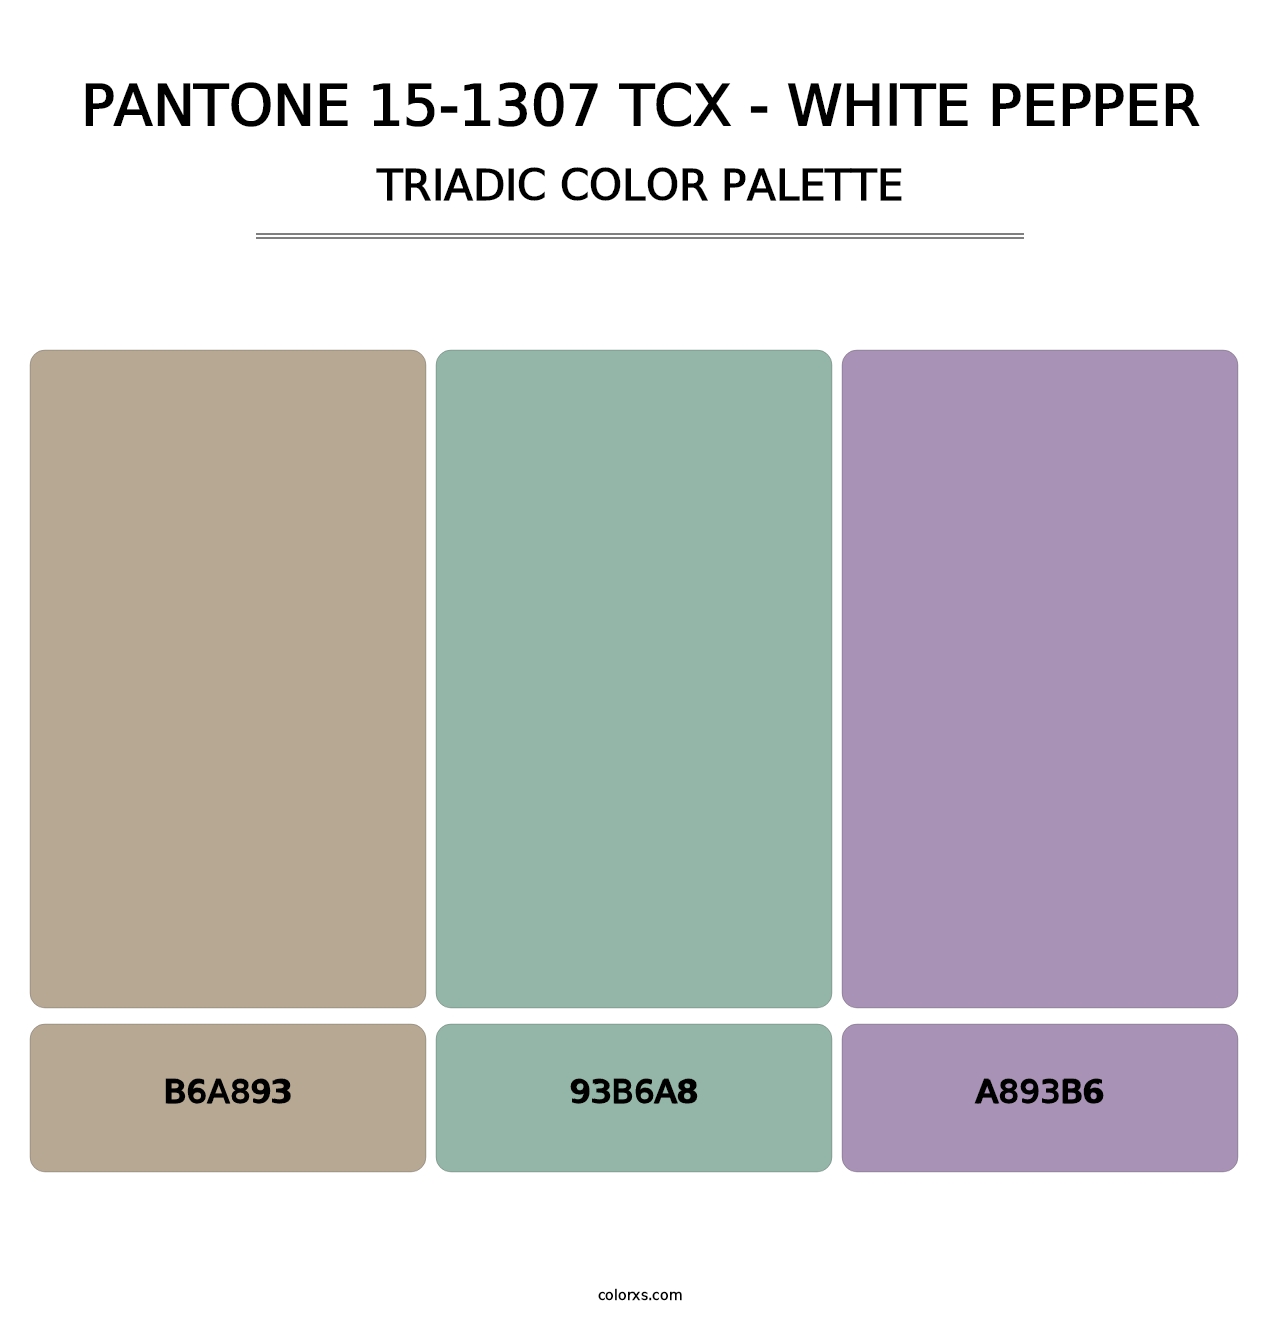 PANTONE 15-1307 TCX - White Pepper - Triadic Color Palette